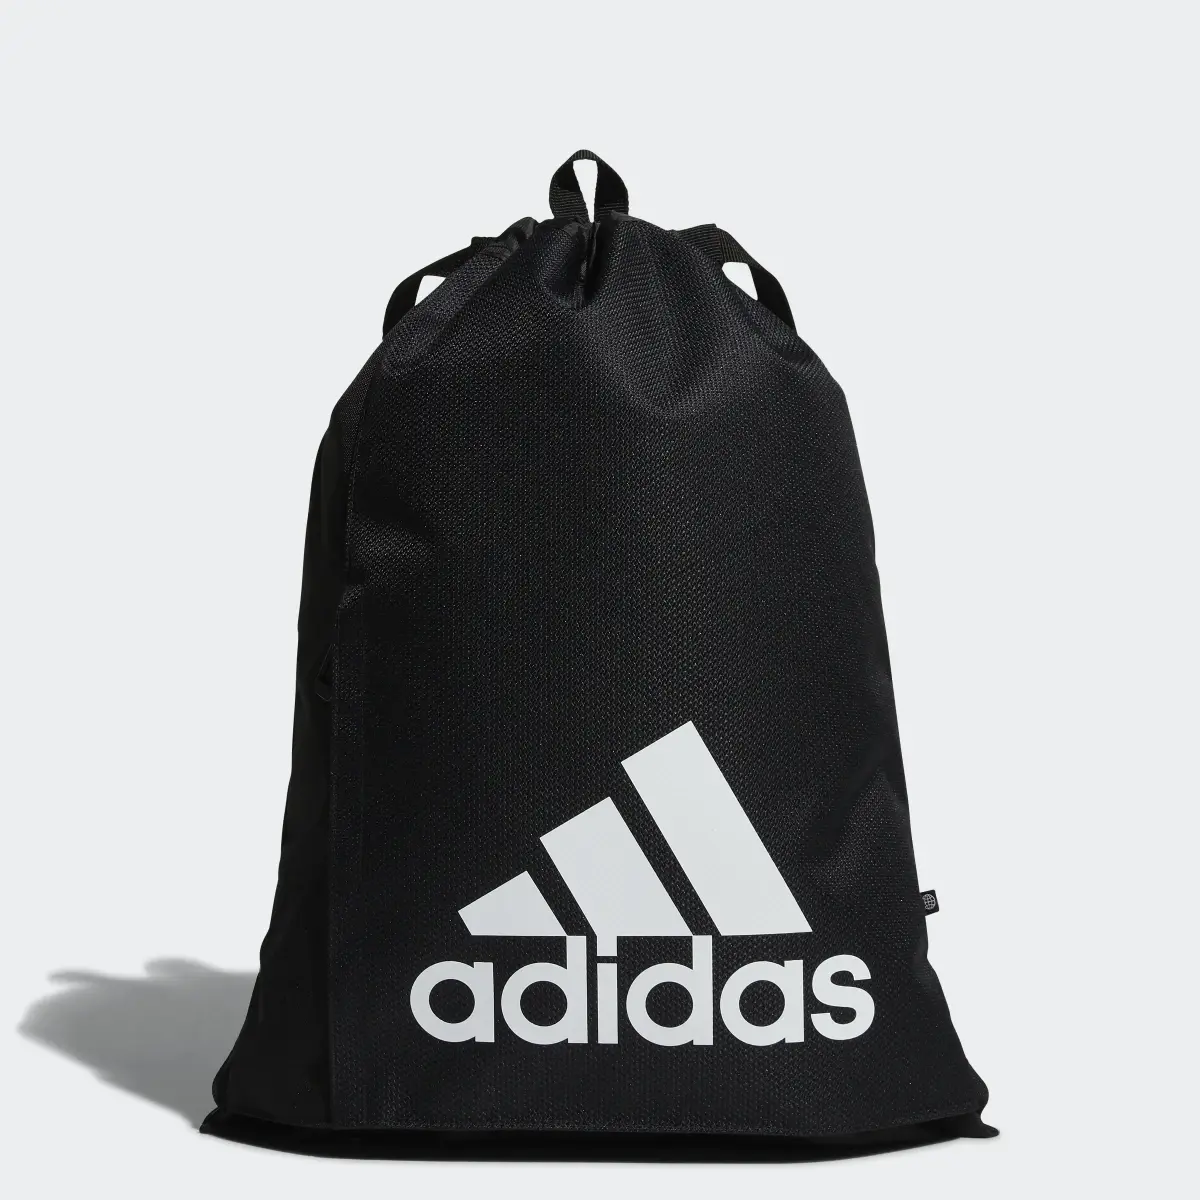 Adidas Optimized Packing System Gym Bag. 1